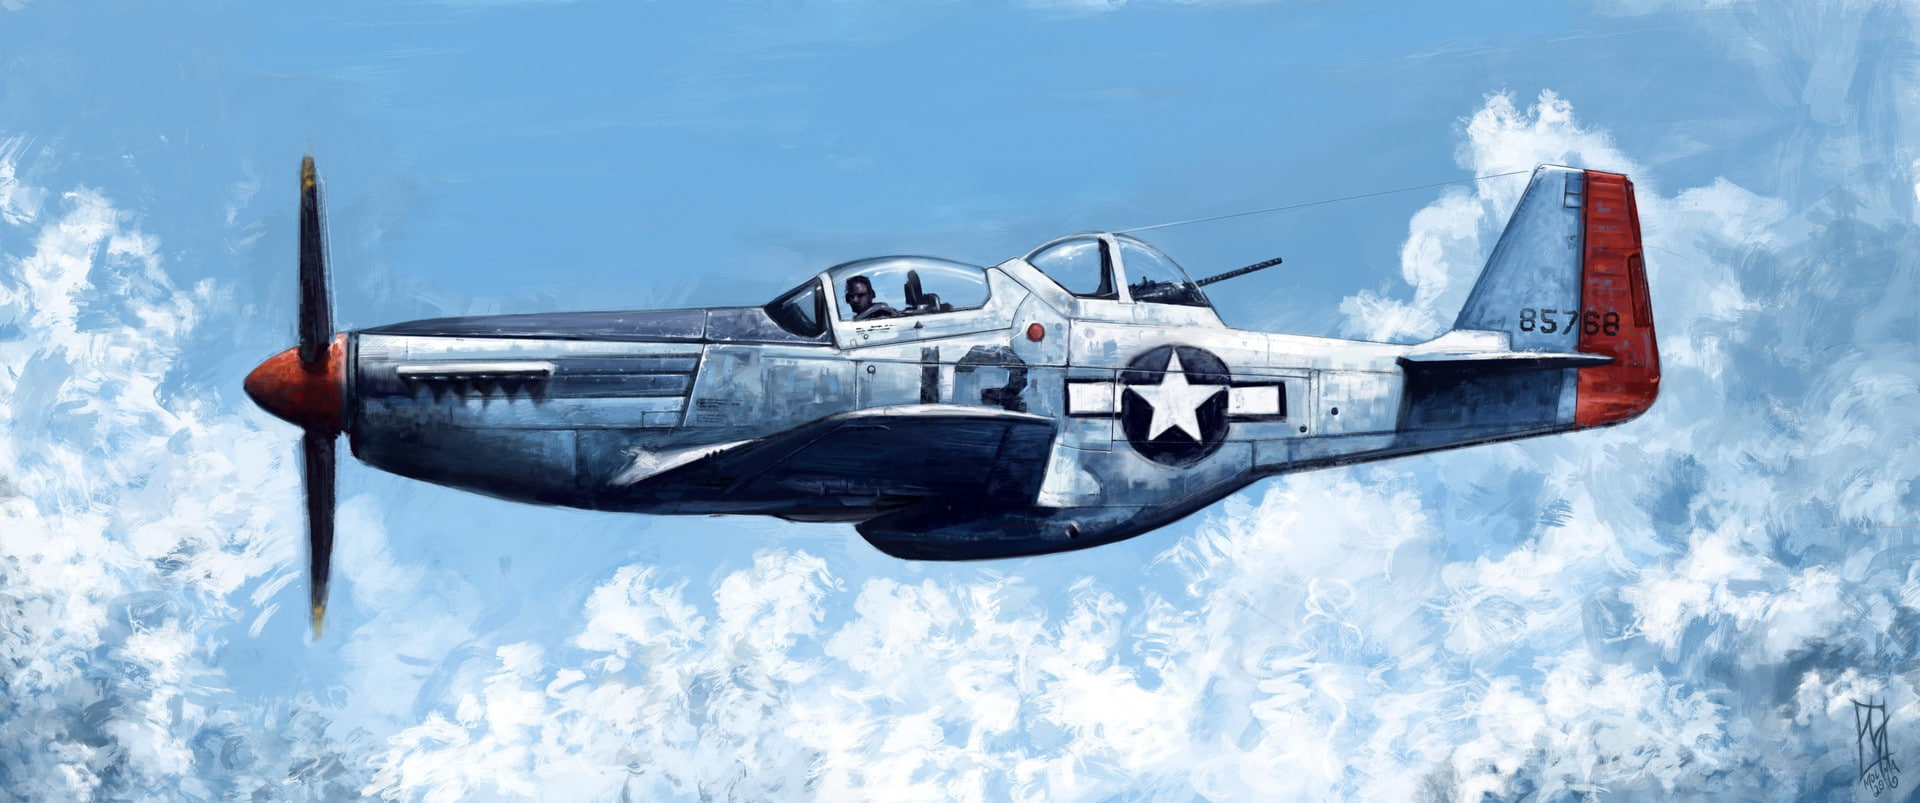 artwork, airplane, North American P-51 Mustang, vehicle